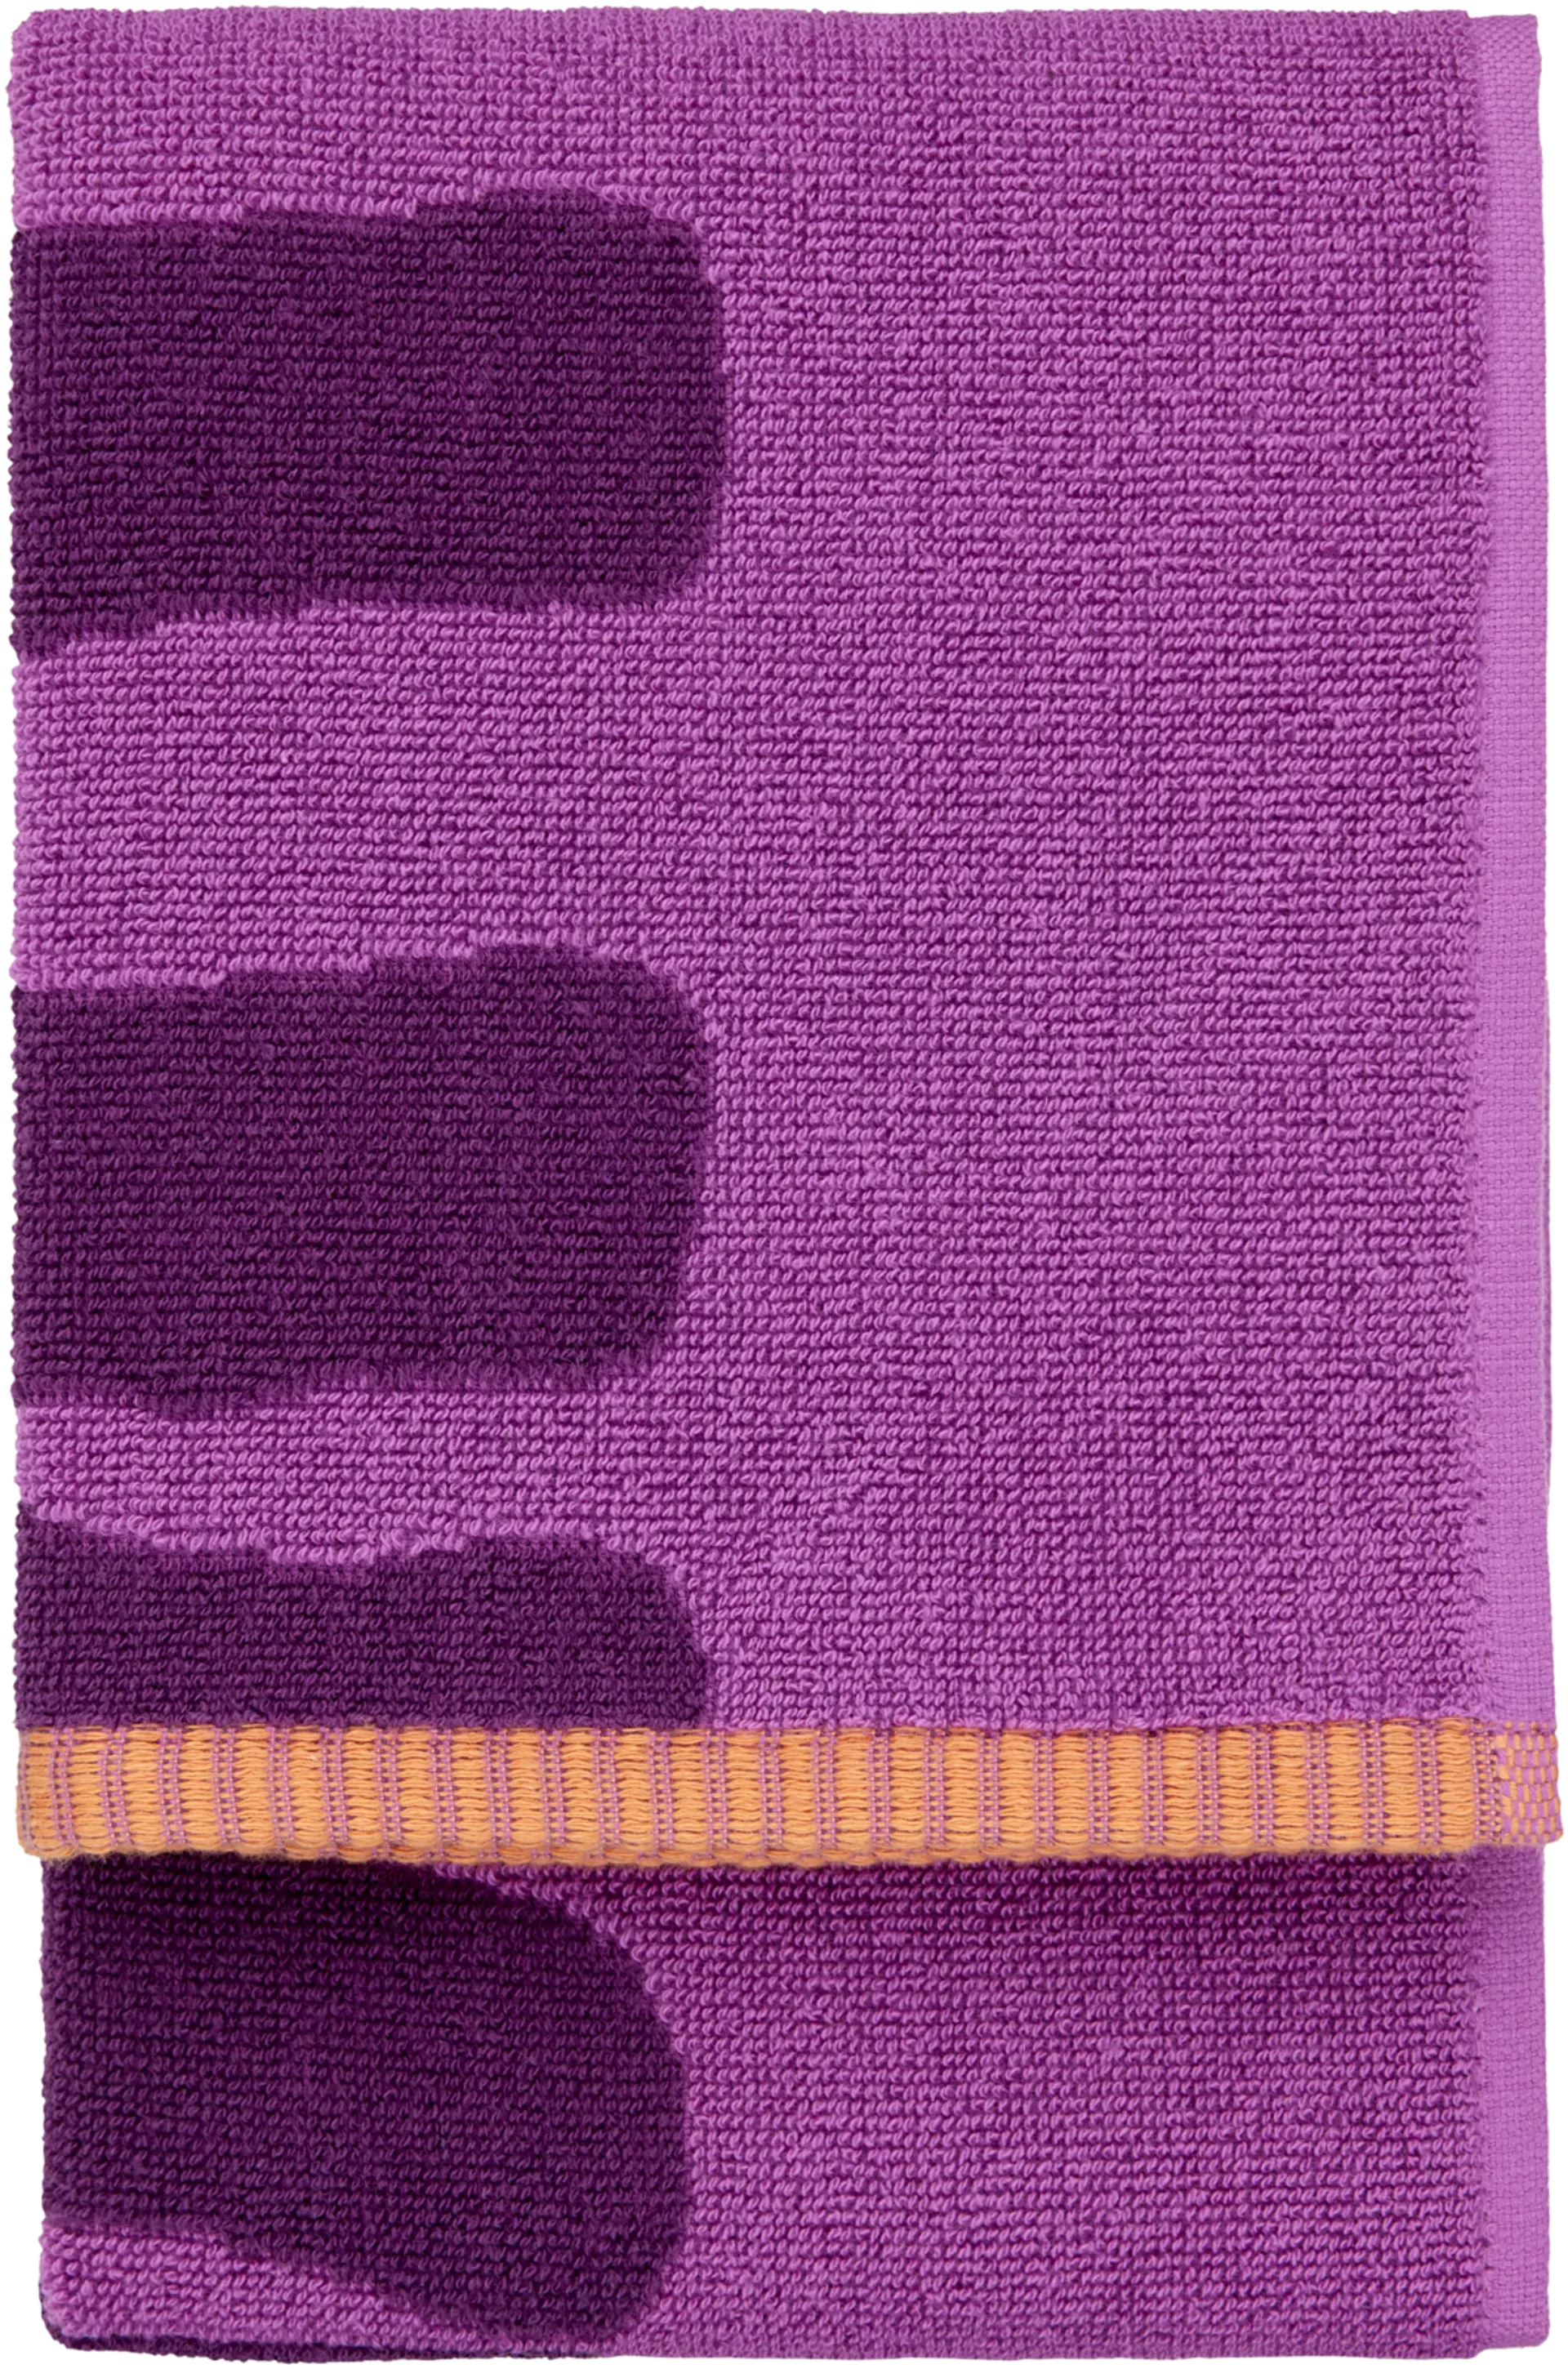 Finlayson Kylpypyyhe Elefantti Vapaa 70x150cm violetti/oranssi - 2